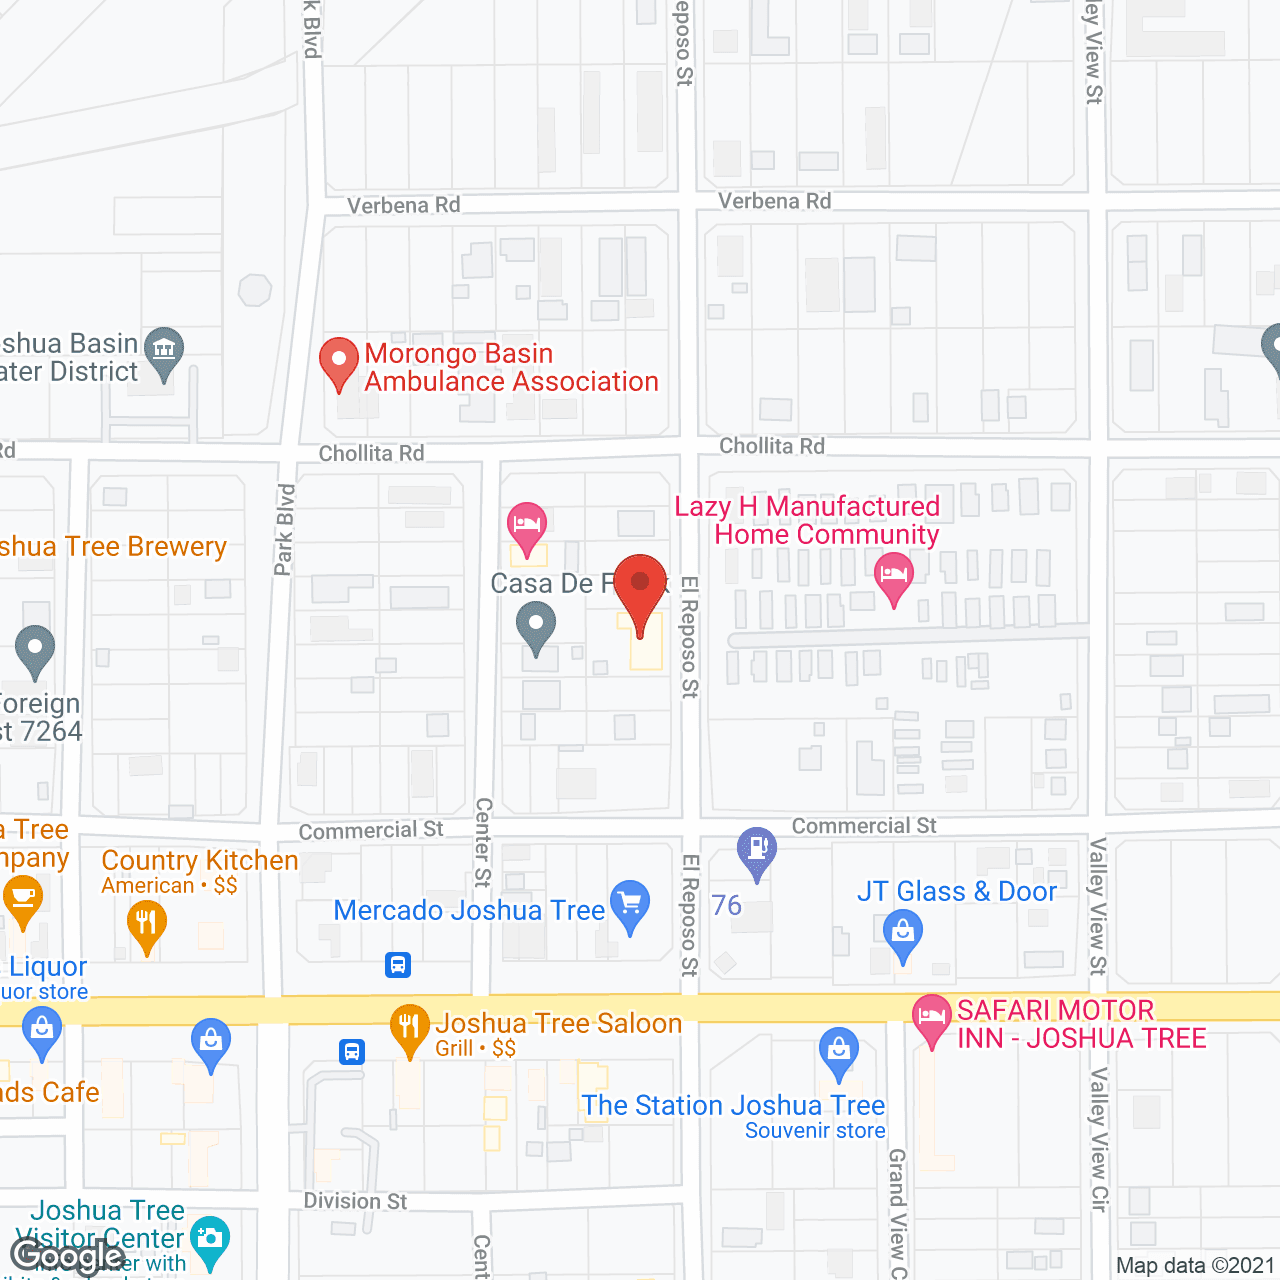 Crystal Care Villa in google map